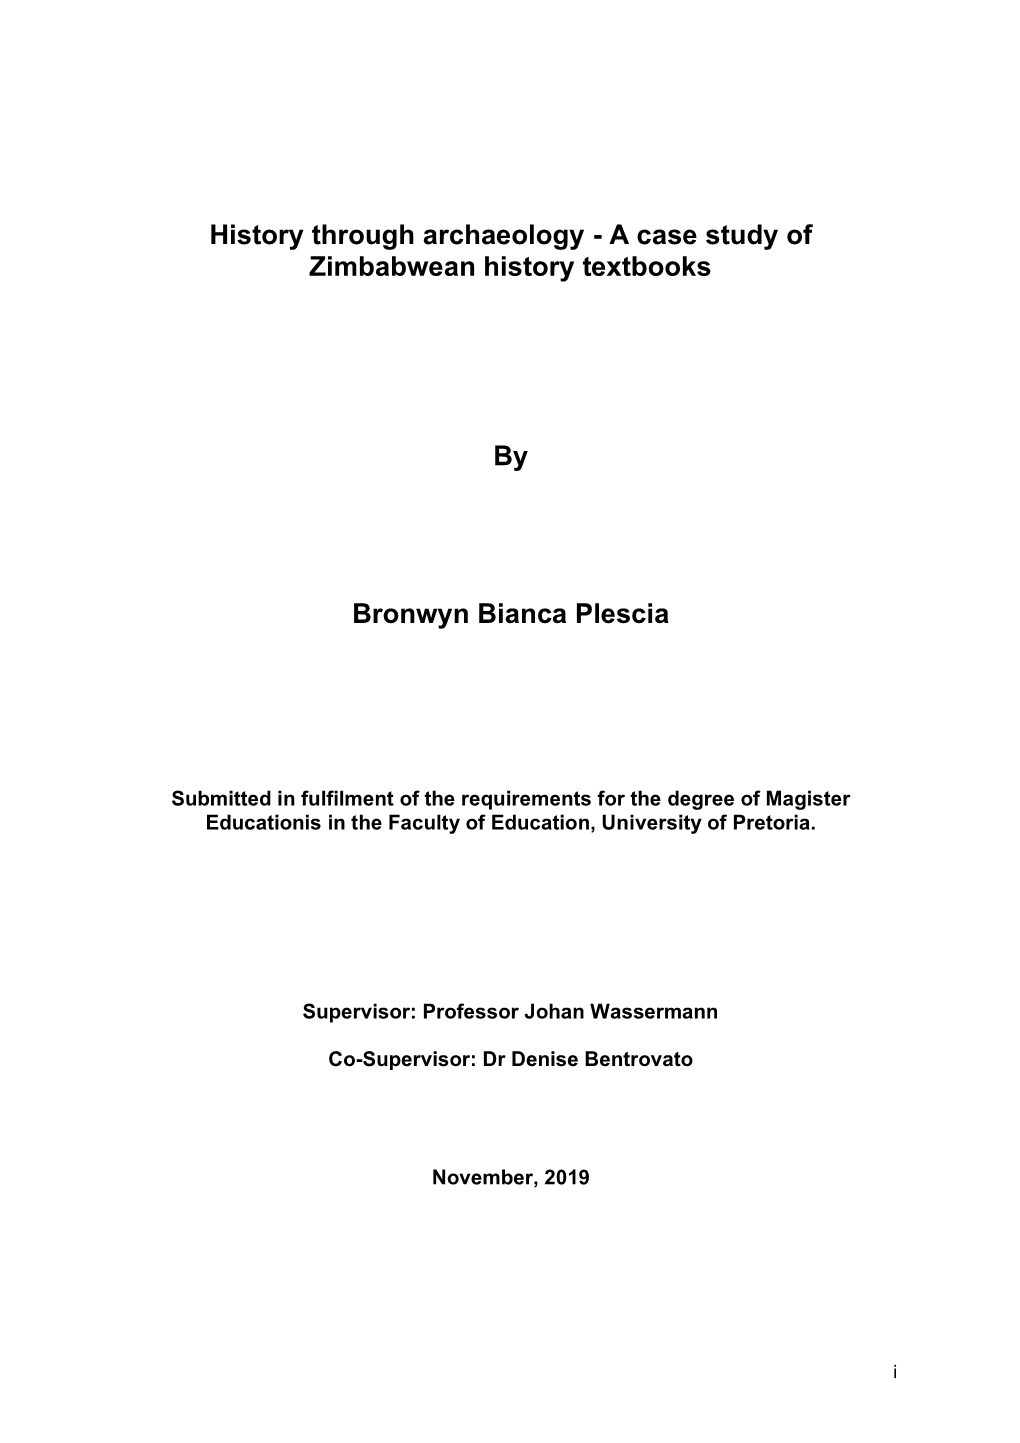 History Through Archaeology - a Case Study of Zimbabwean History Textbooks